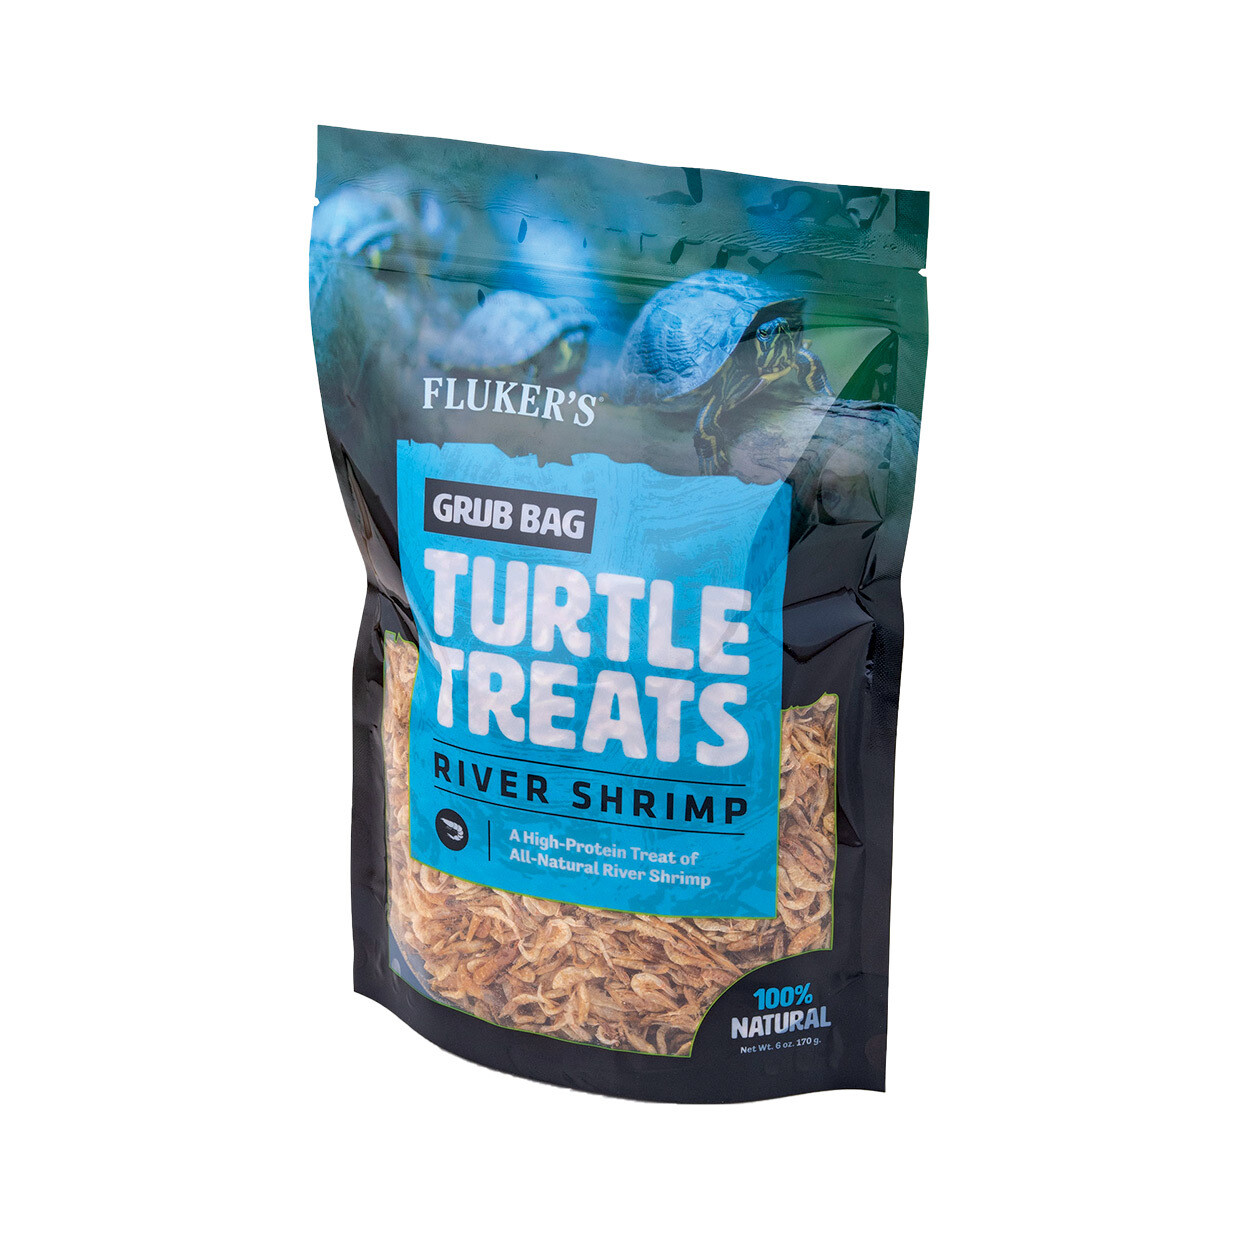 Fluker's Grub Bag Turtle Treats - River Shrimp - 170g (6oz)